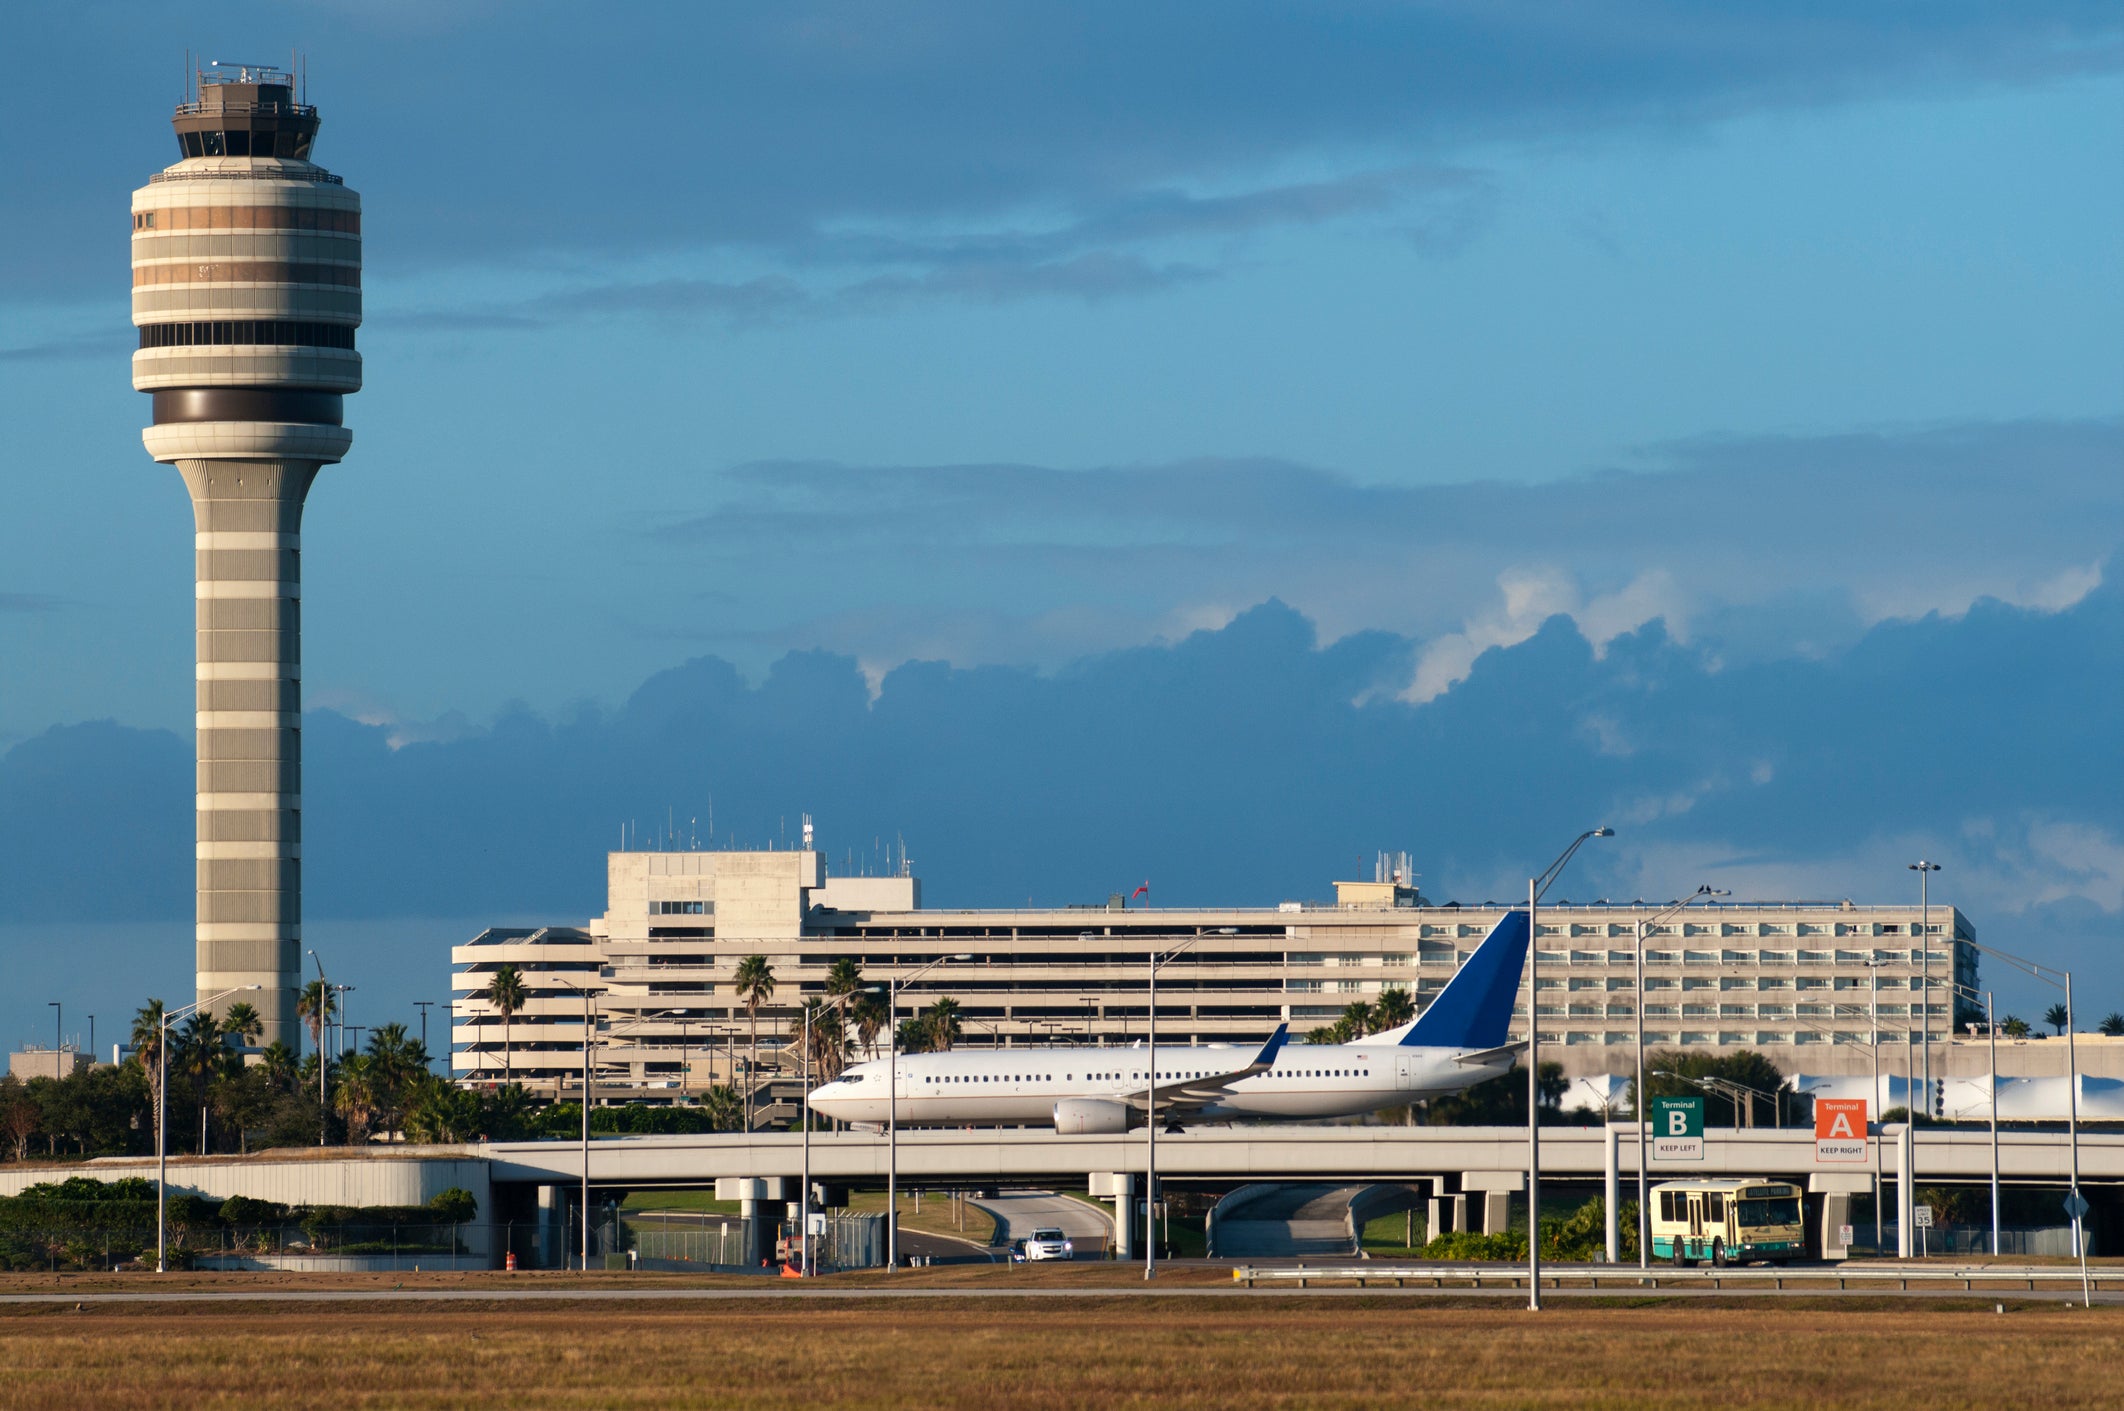 Control tower at Orlando International Airport.